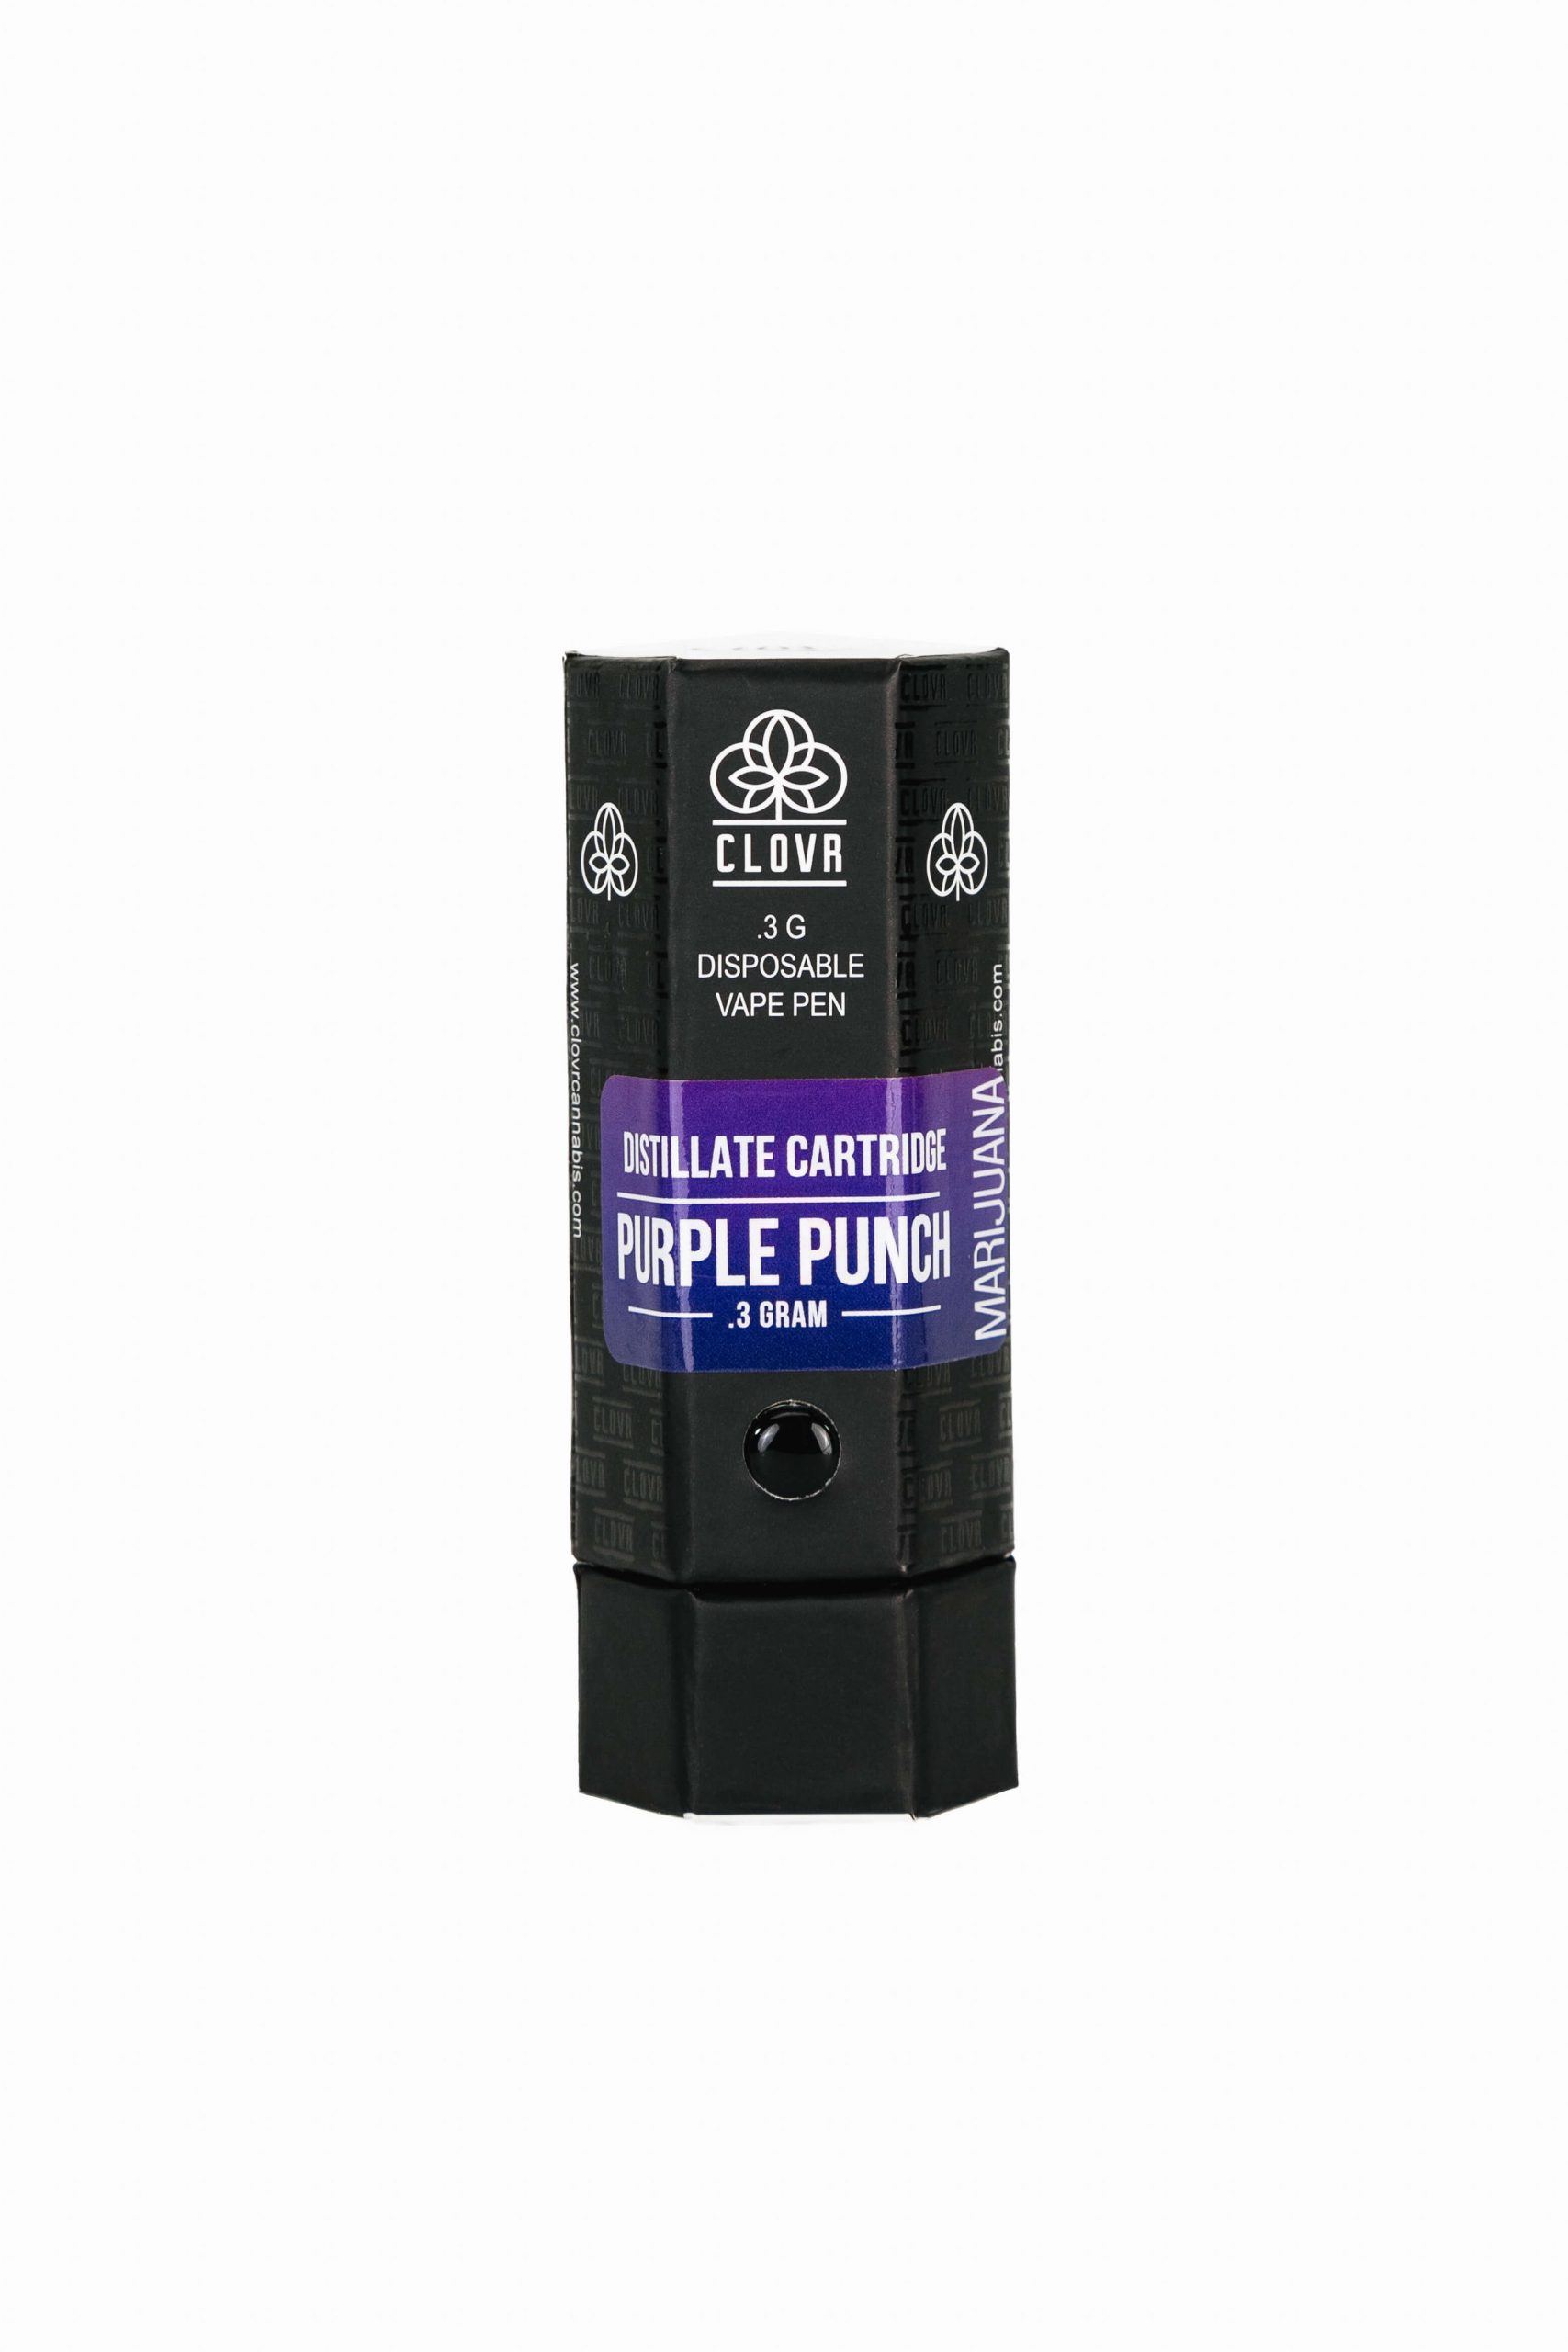 clovr marijuana distillate cartridge purple punch packaging